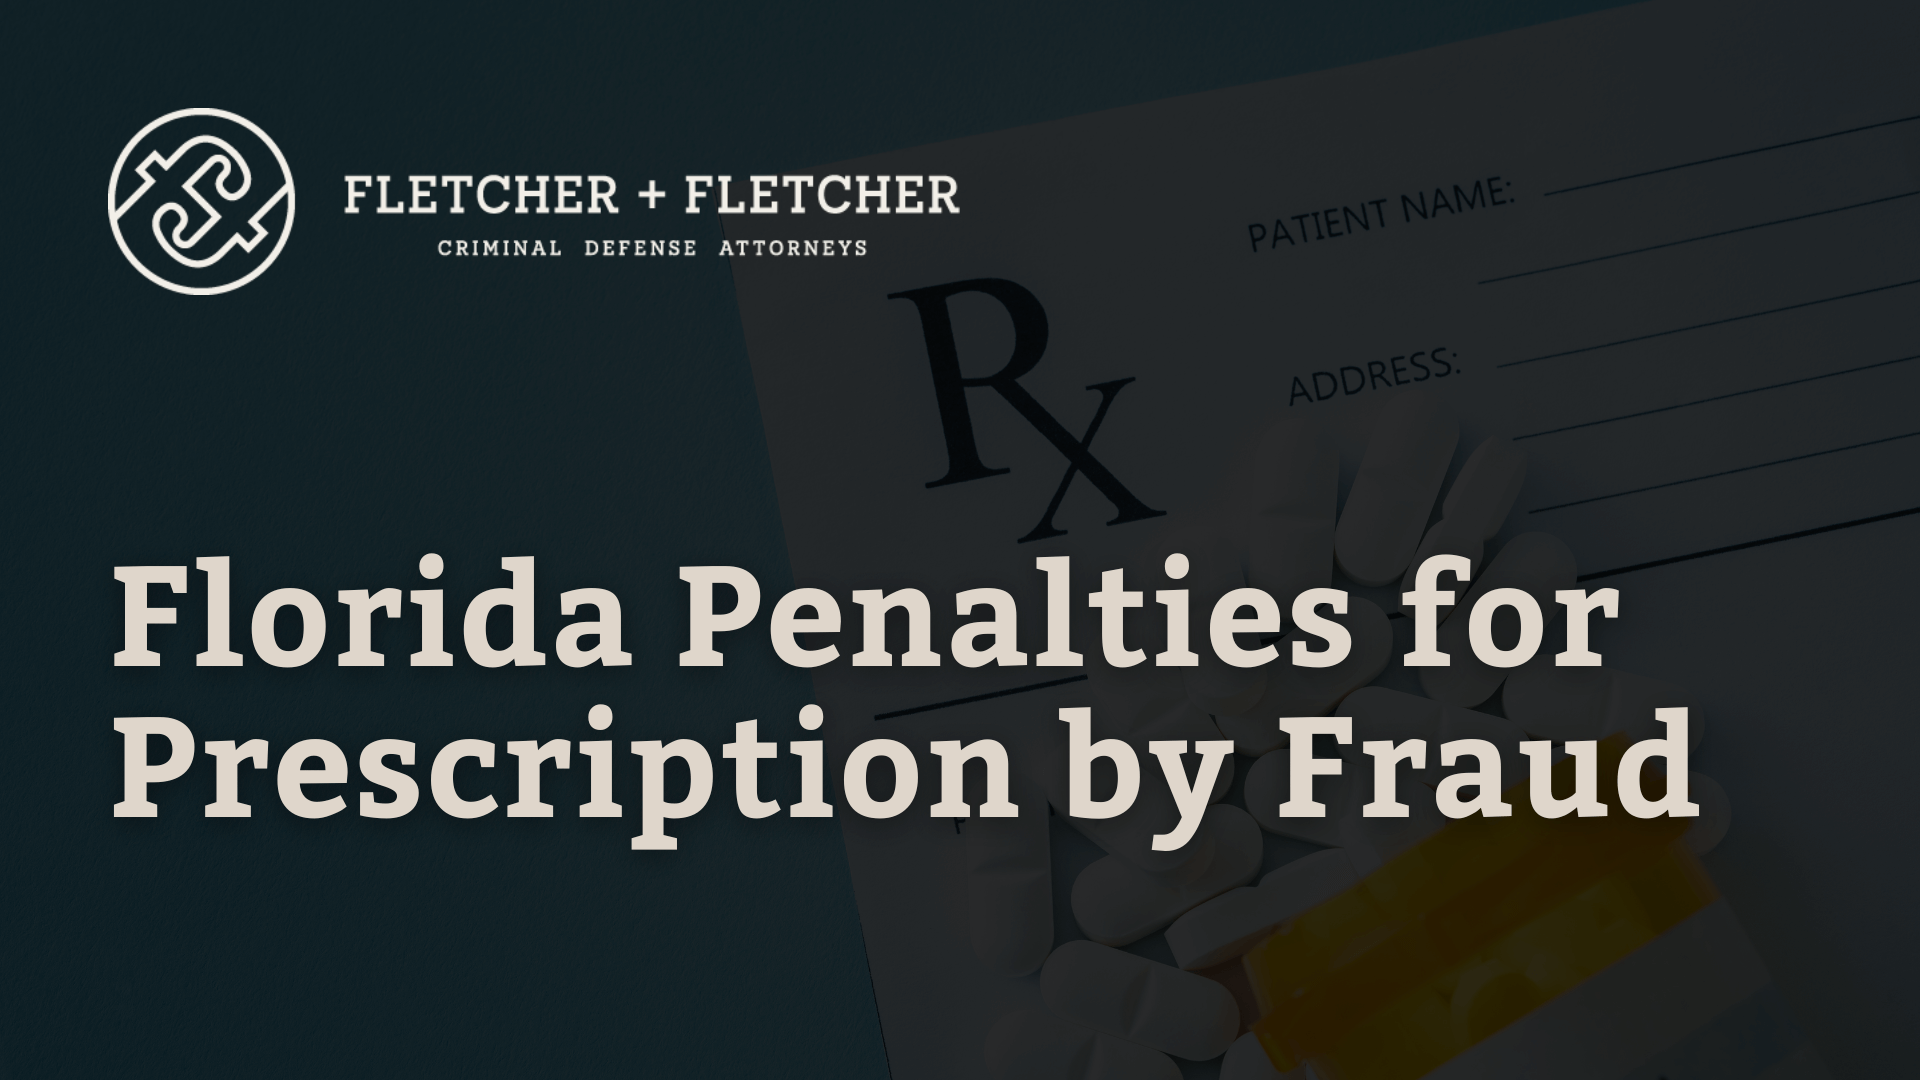 Florida Penalties for Prescription by Fraud - Fletcher Fletcher st petersburg florida criminal defense lawyers